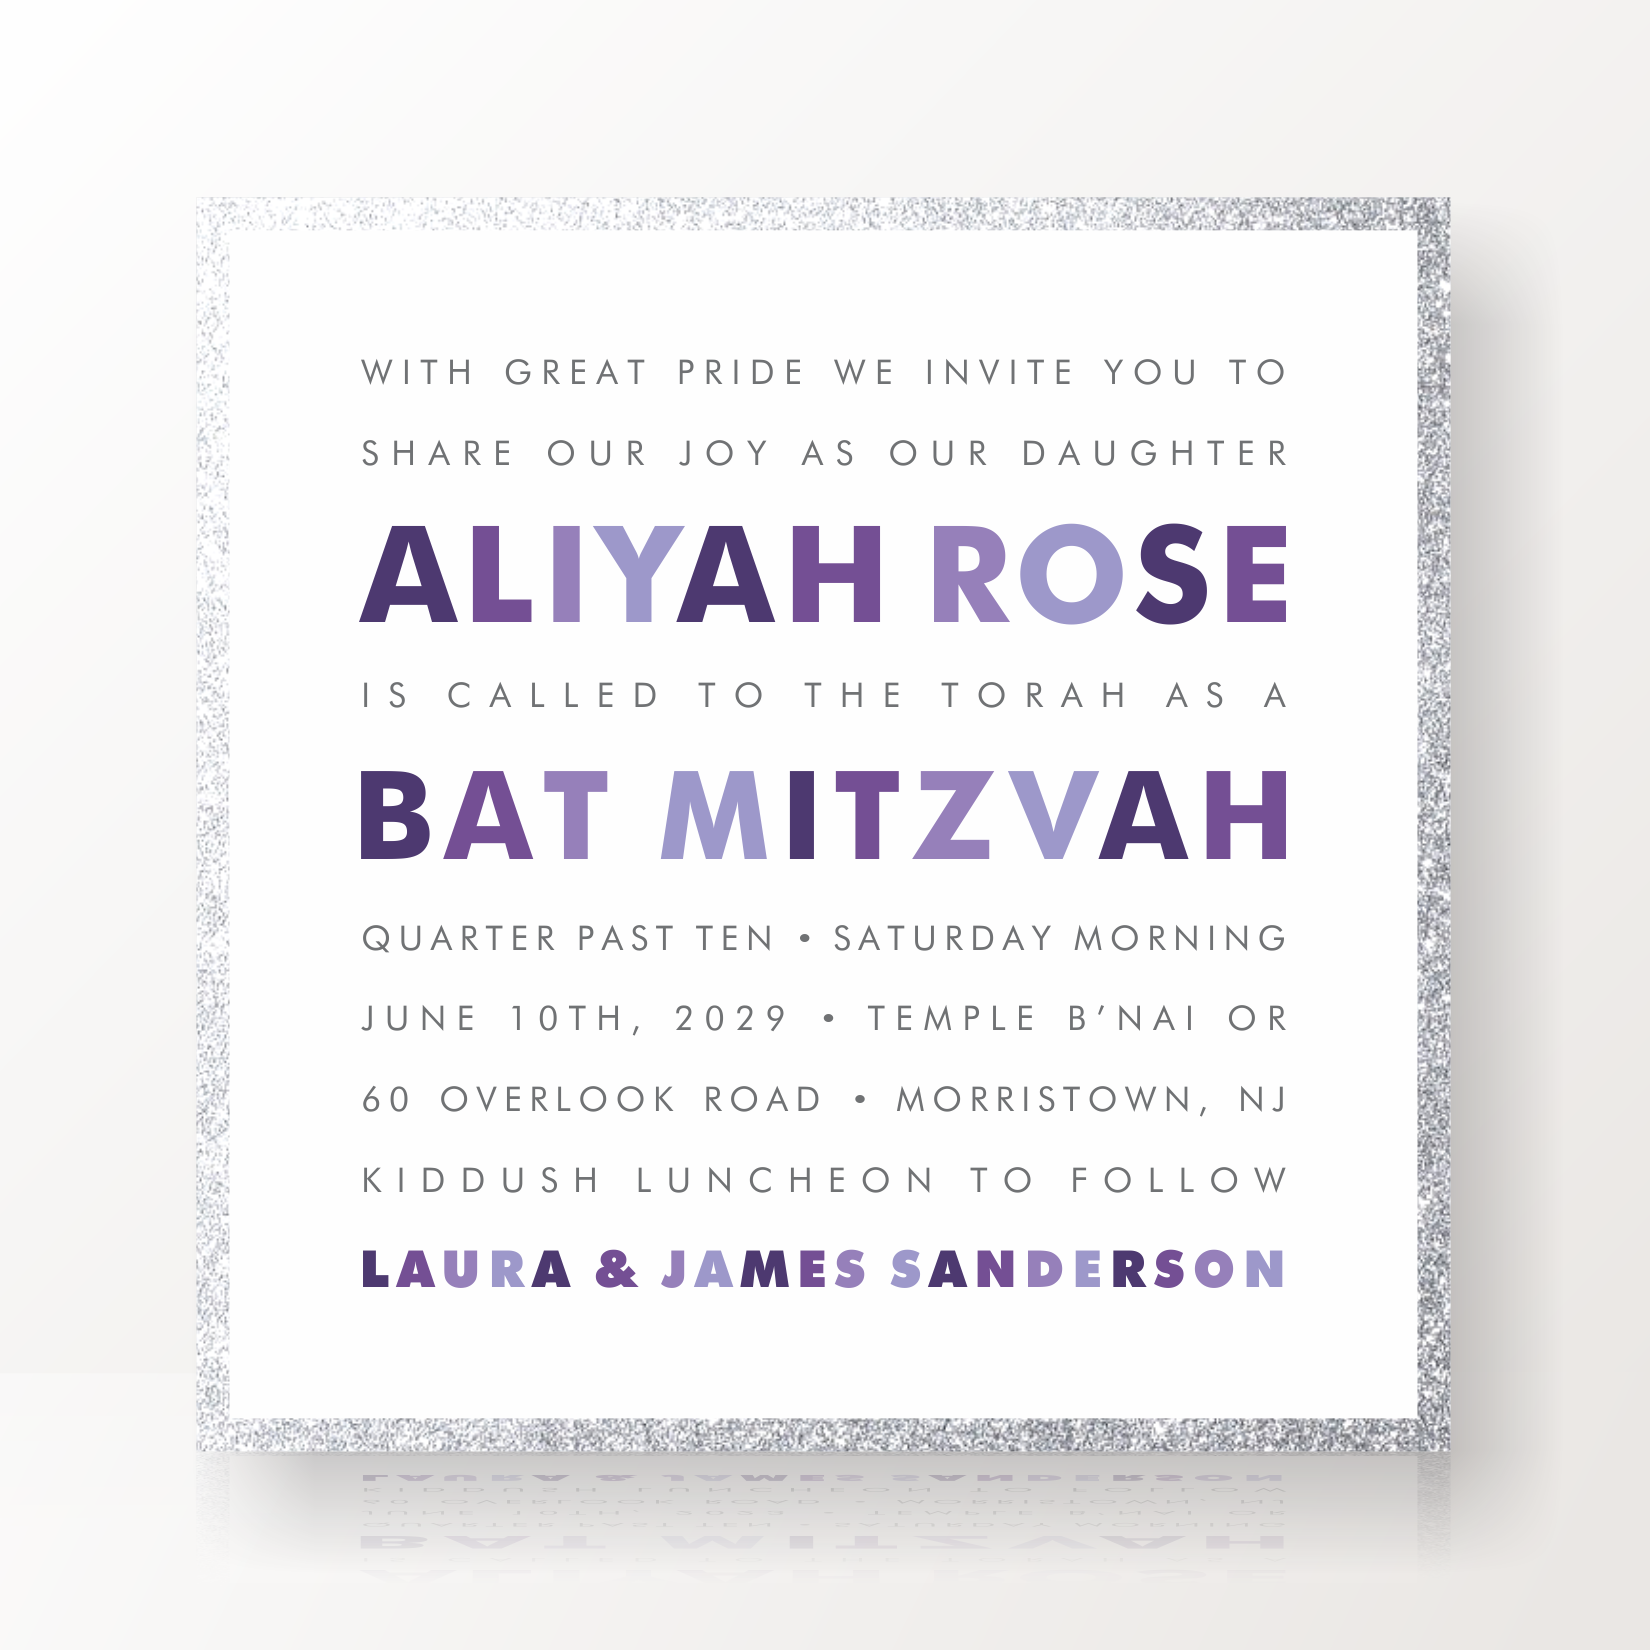 SARAH SCHWARTZ BAT MITZVAH INVITATION SUITE 5137